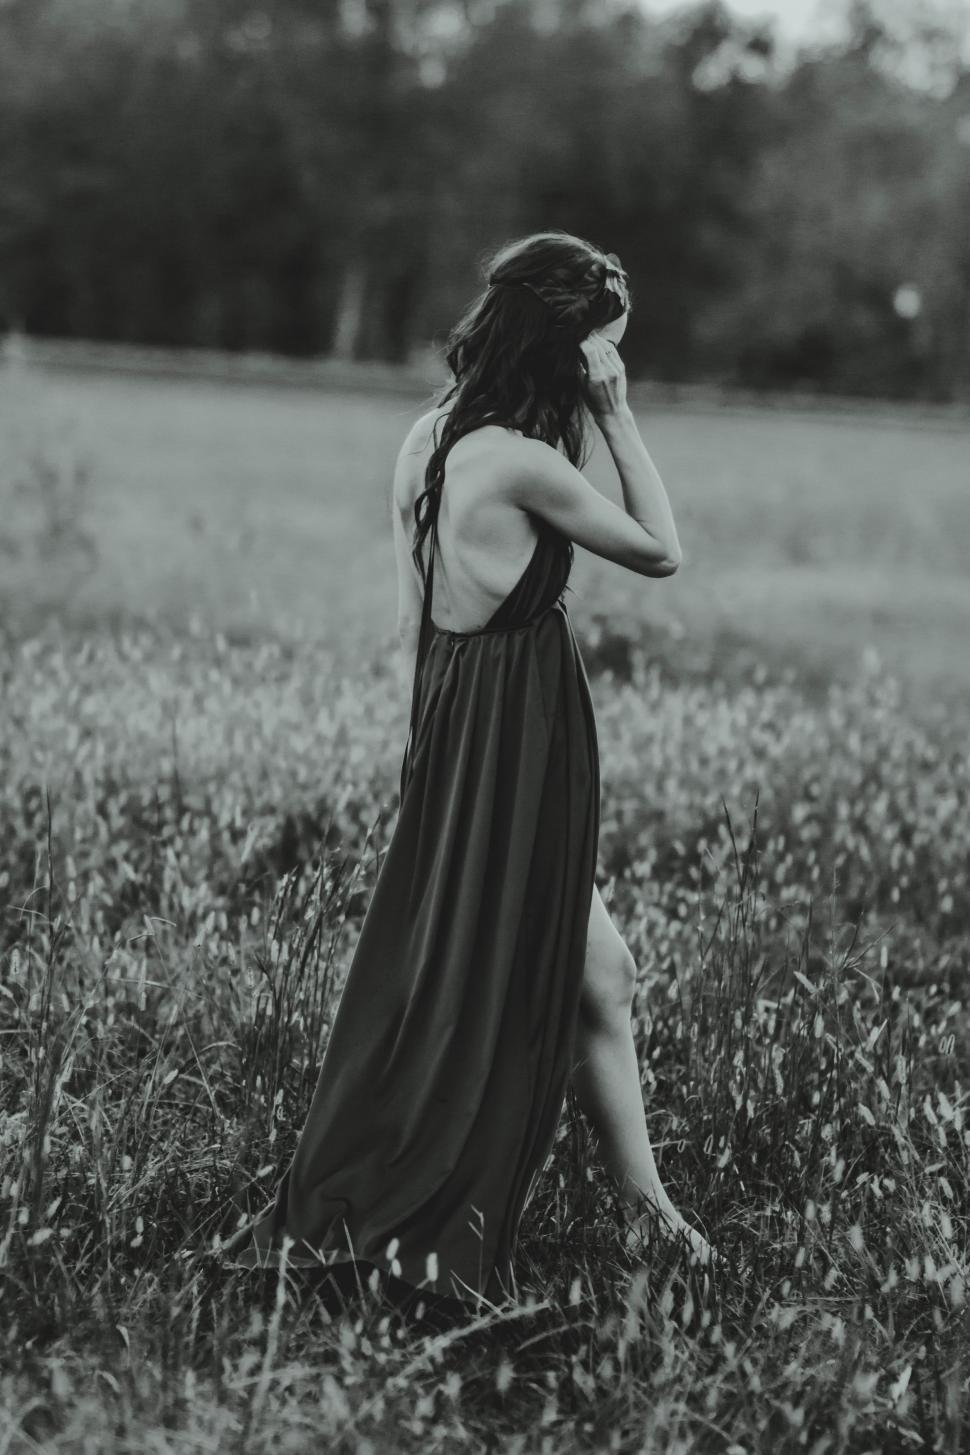 Free Image of Woman Standing in Long Dress in Field 